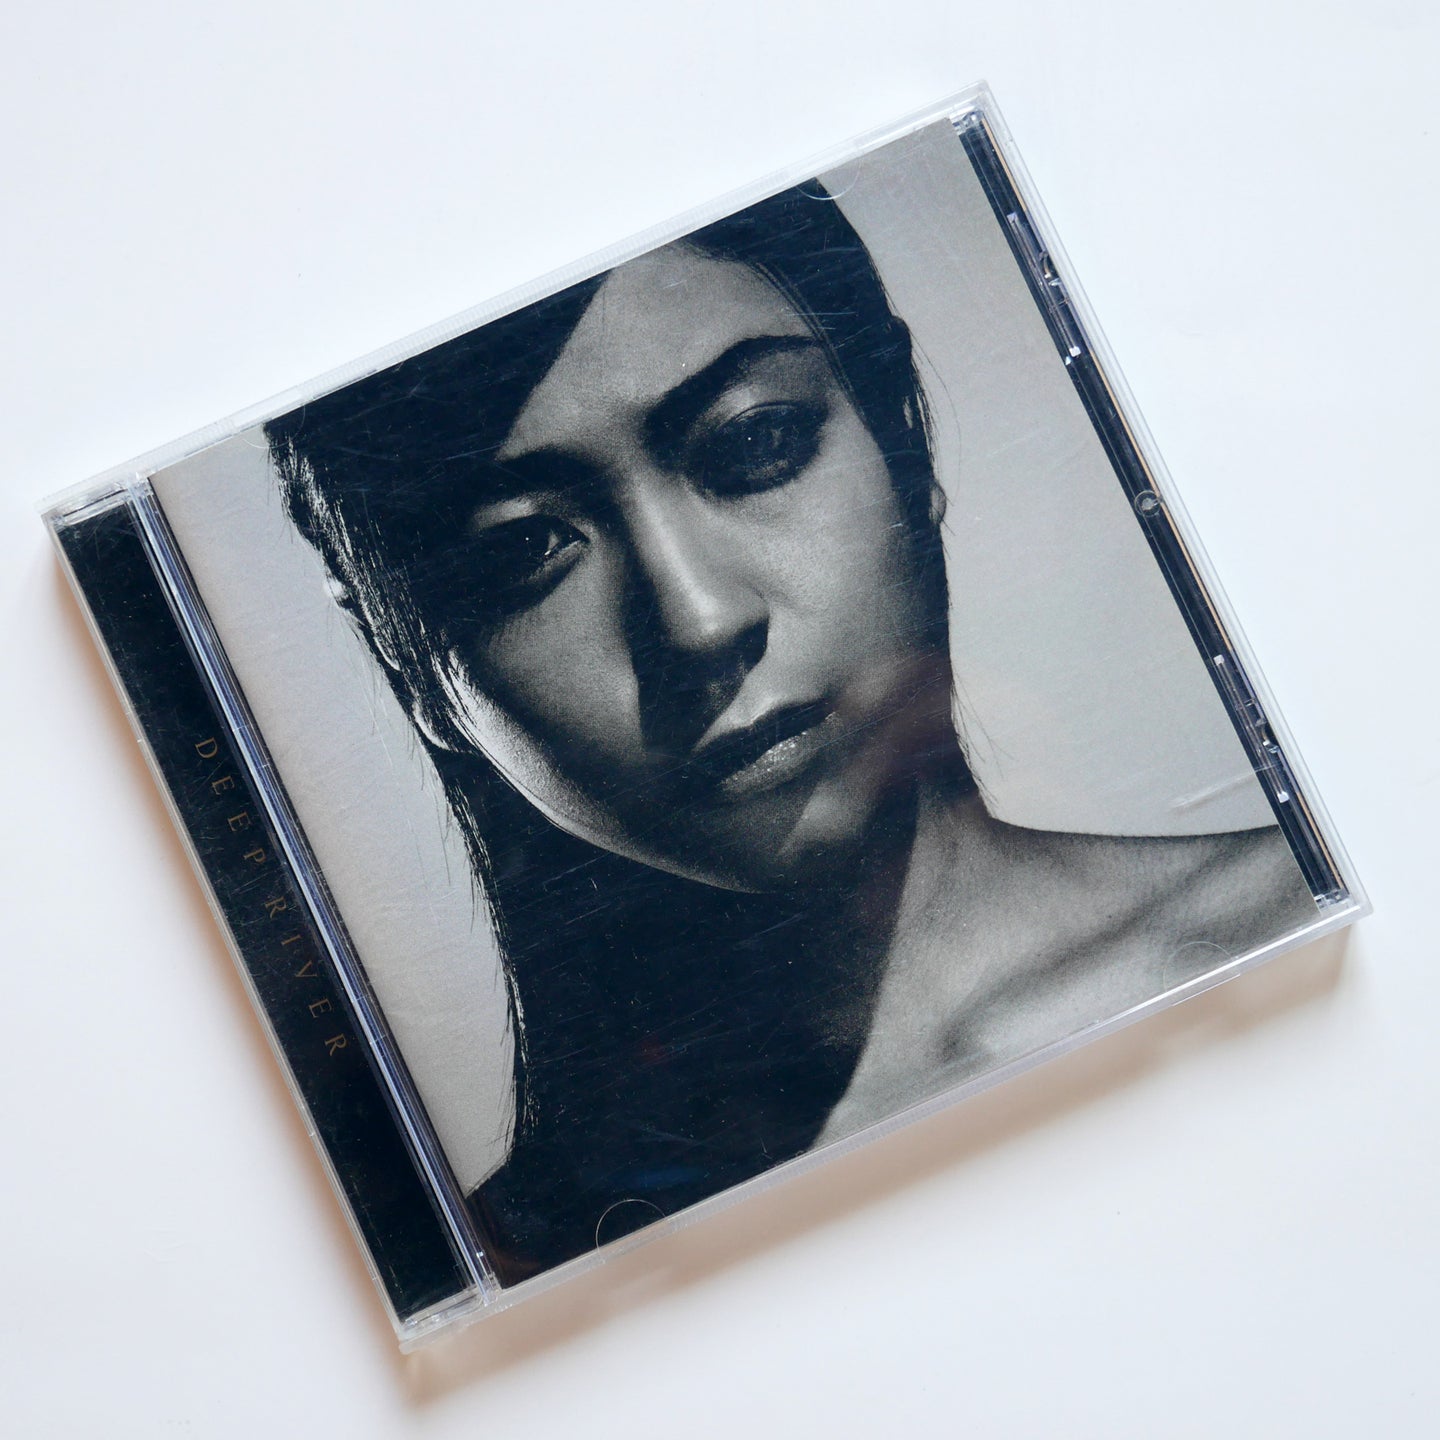 Utada Hikaru - Deep River CD